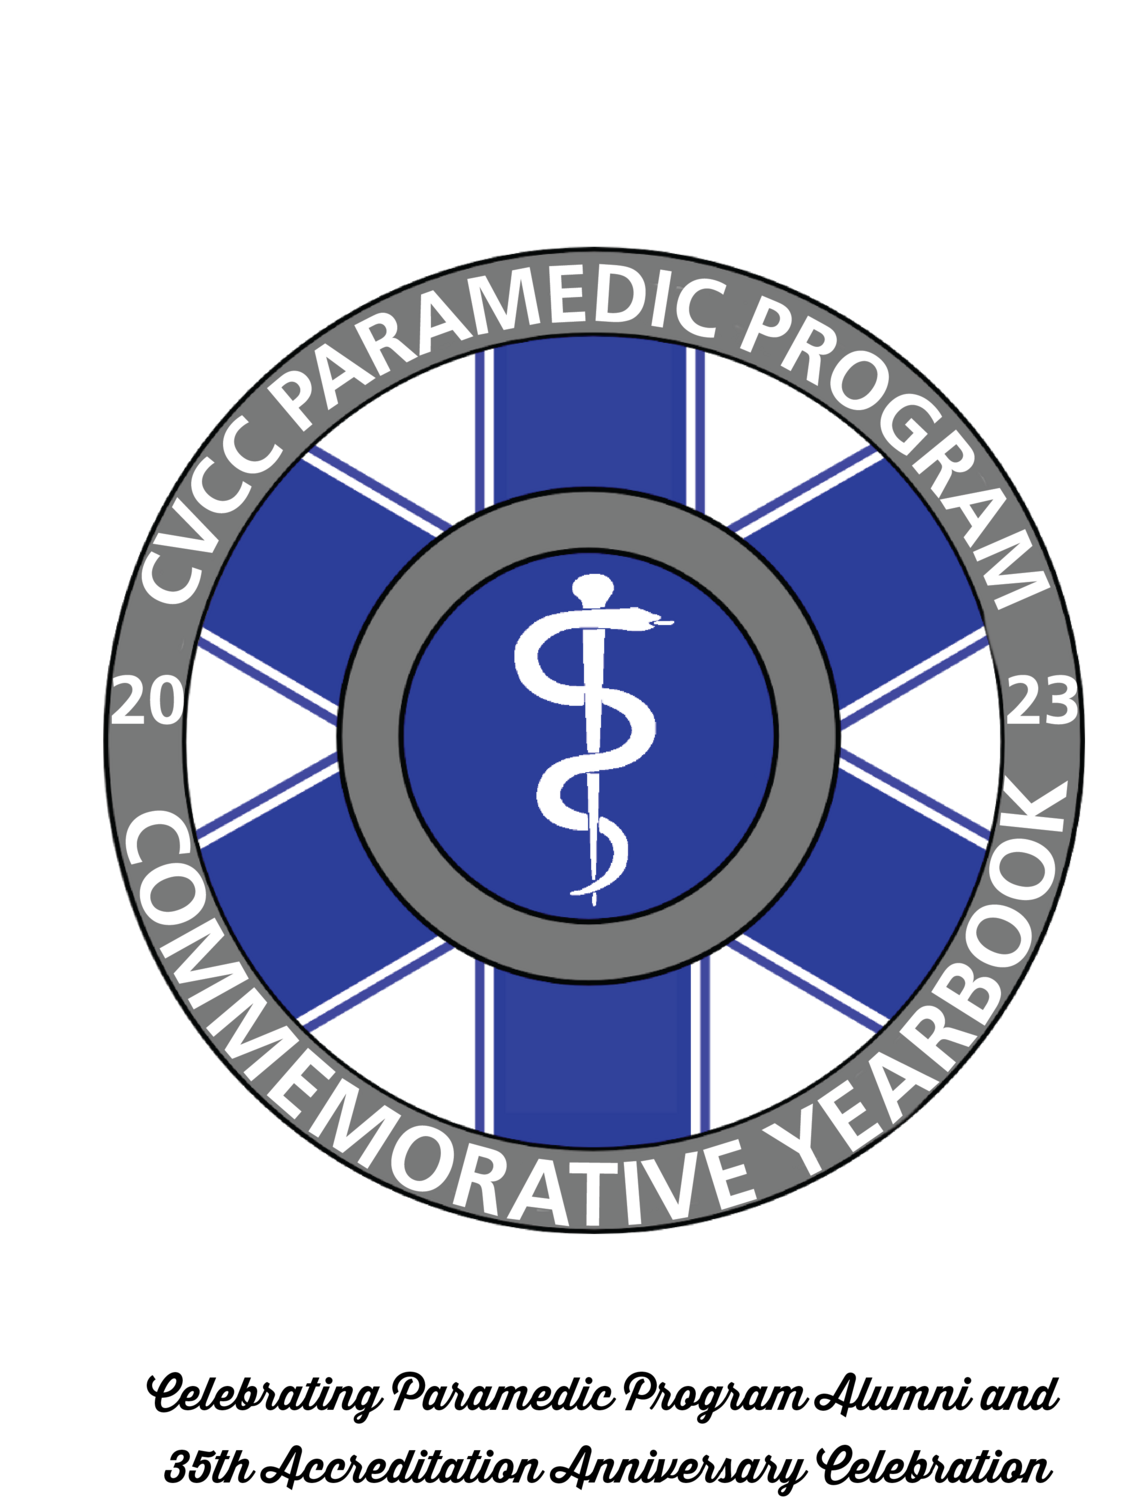 Paramedic Program Commemorative Book Ad: Quarter Page Ad 4.25"x5.5" COLOR